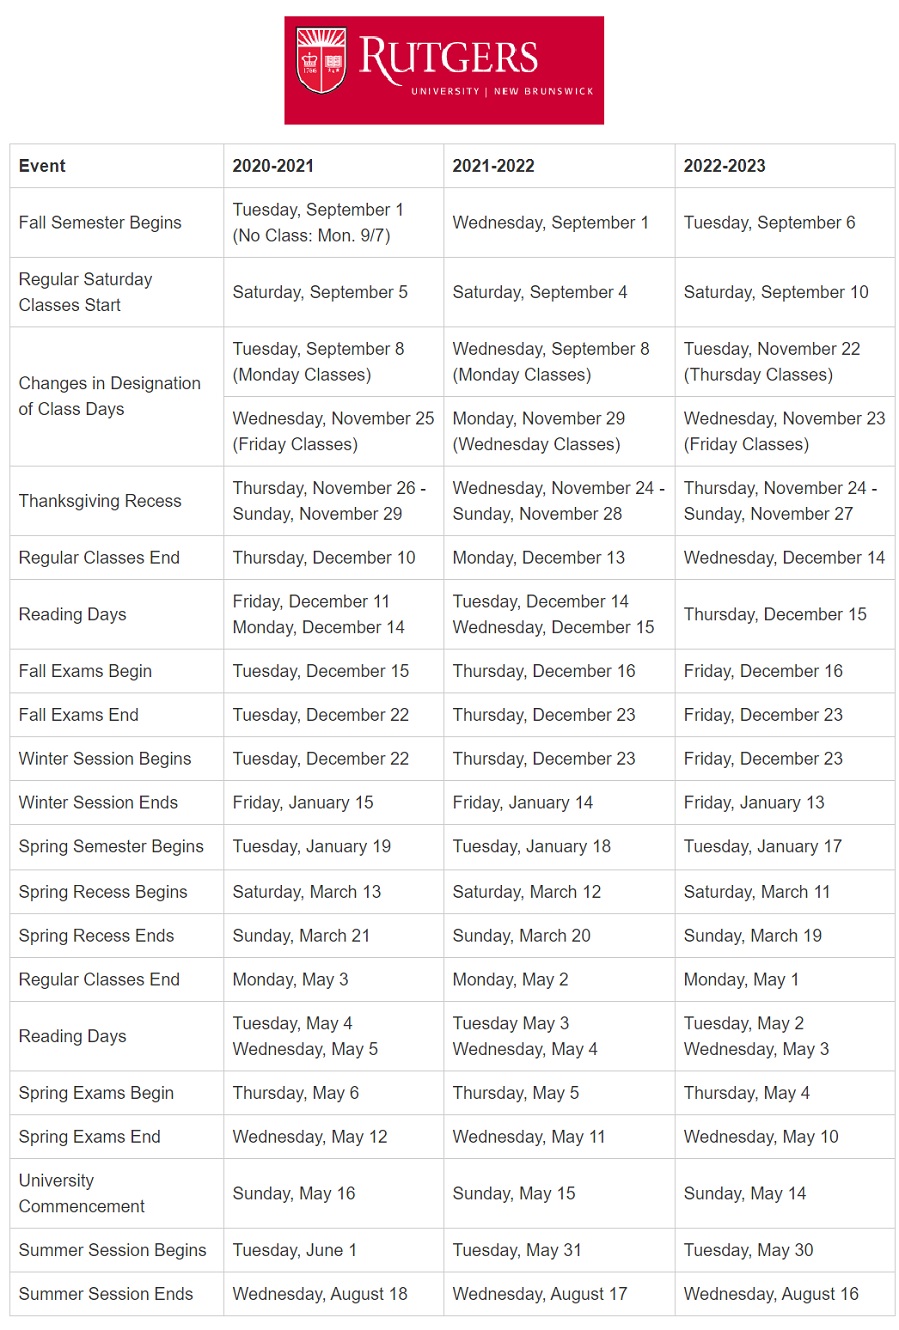 Rutgers University 2022 Calendar - March 2022 Calendar